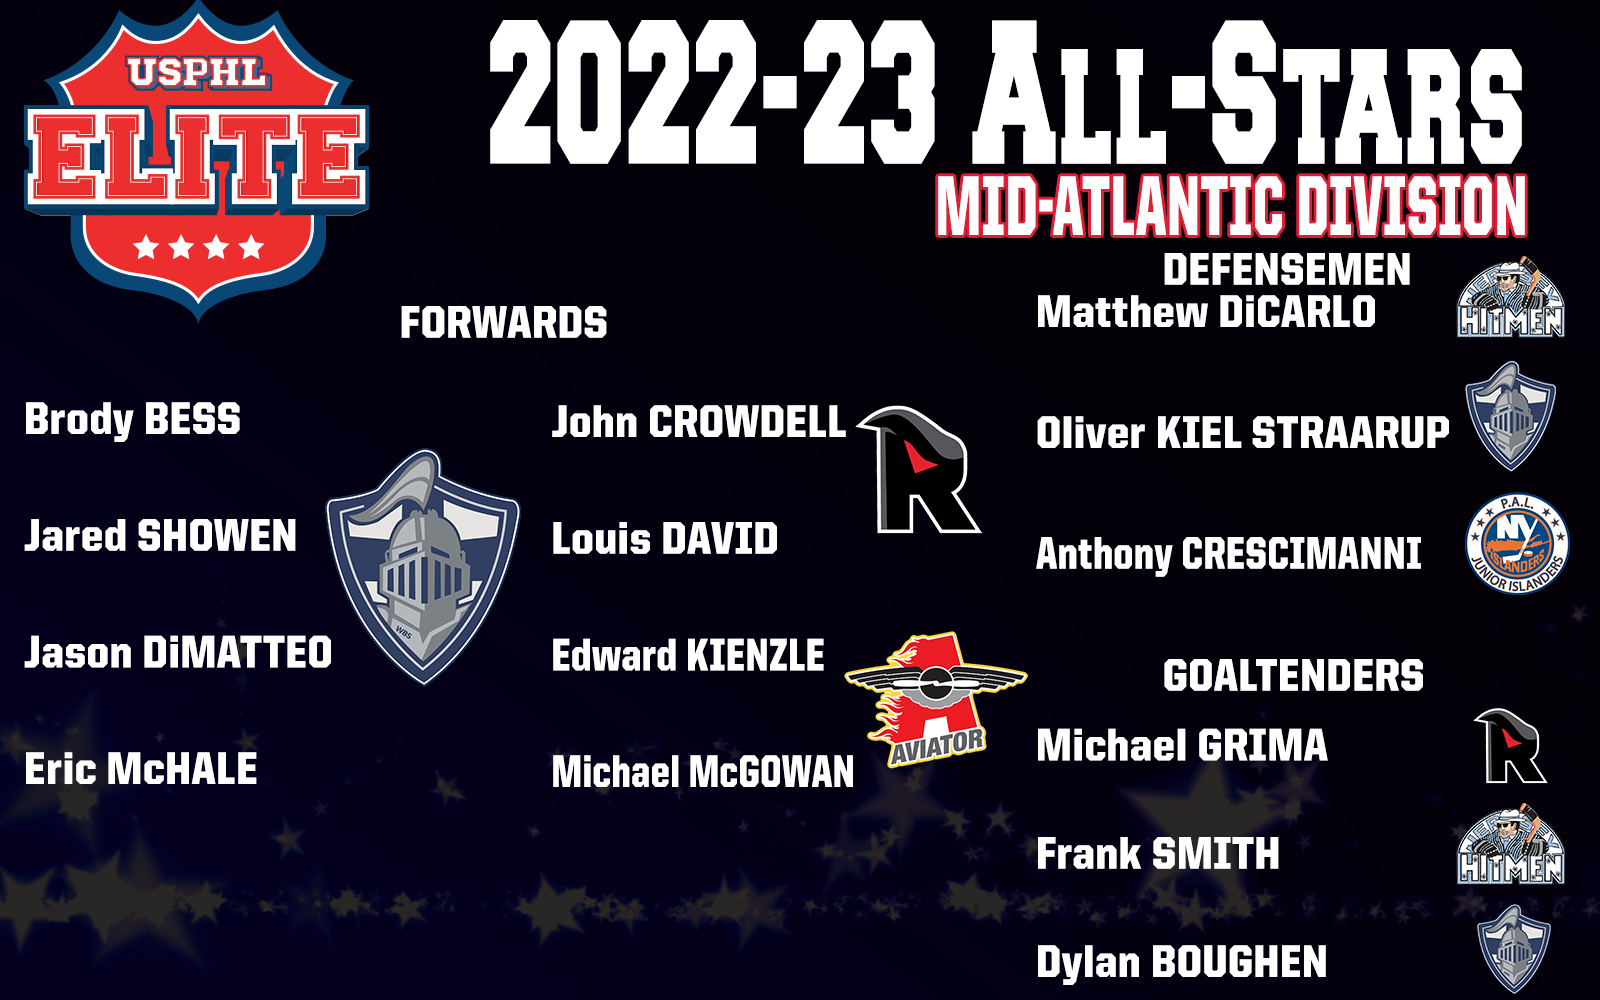 USPHL Elite 2022-23 Mid-Atlantic Division All-Stars